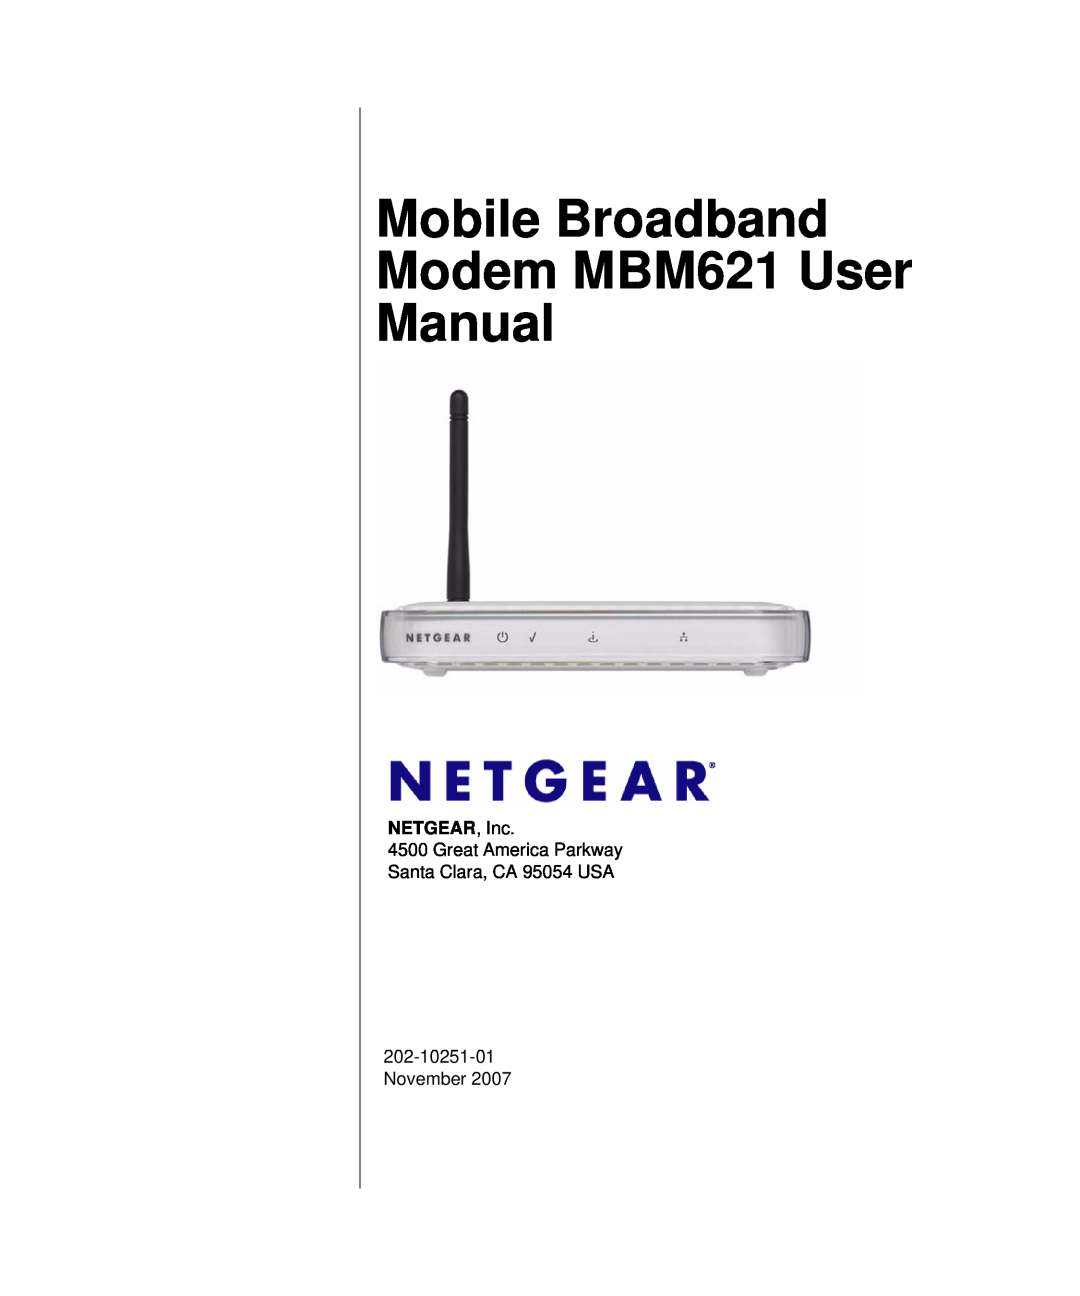 NETGEAR user manual Mobile Broadband Modem MBM621 User Manual, NETGEAR, Inc 